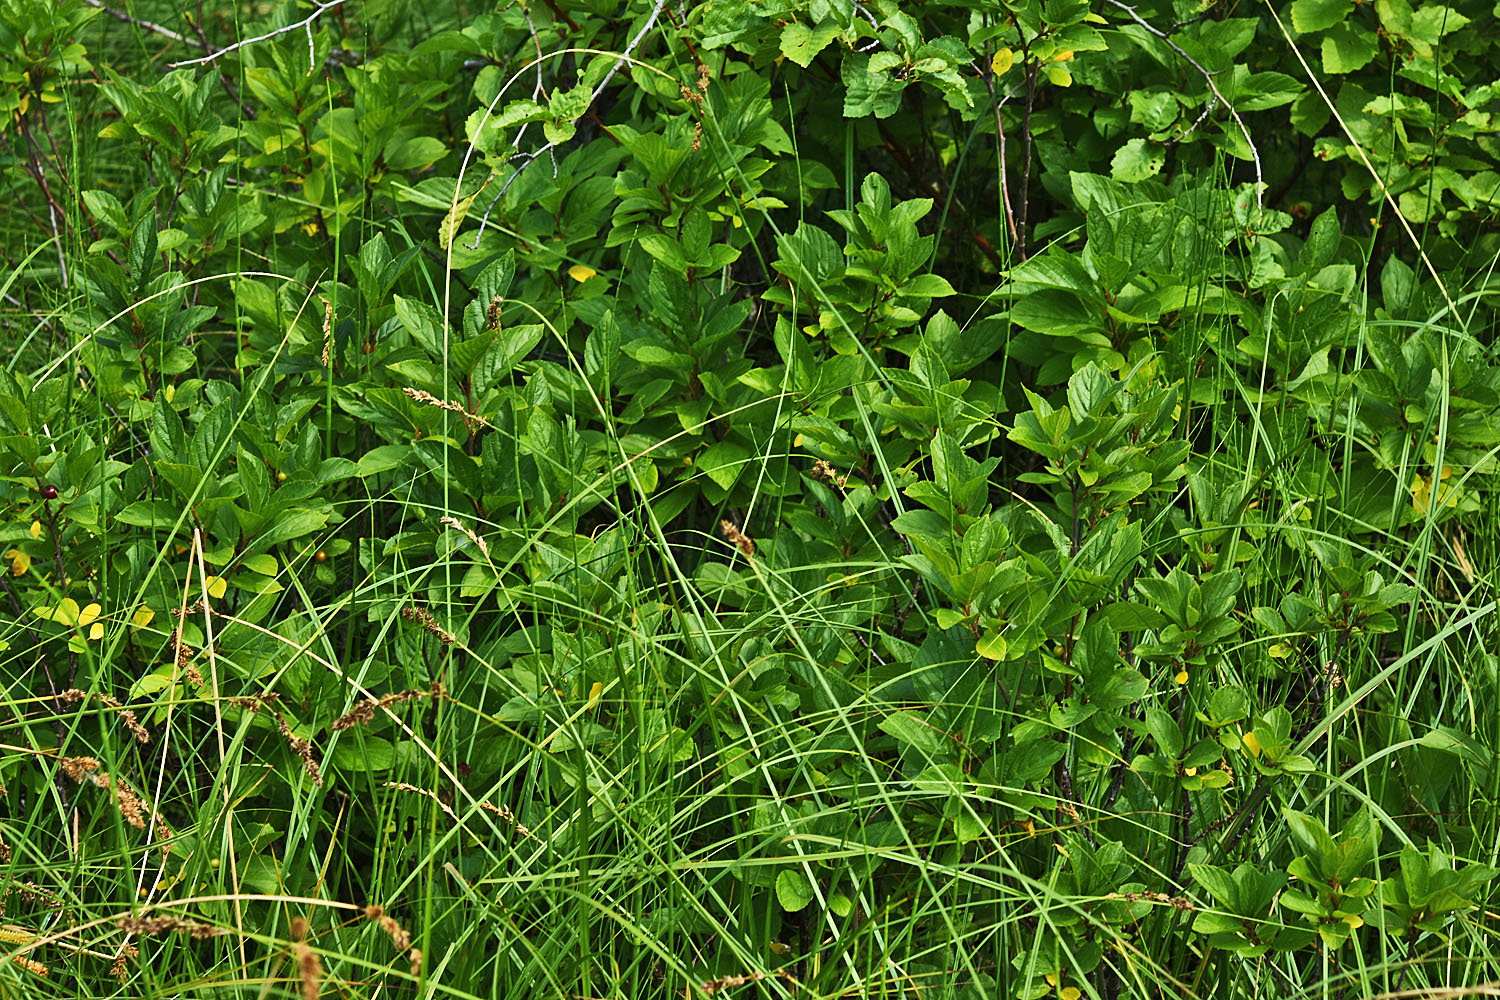 Flora of Eastern Washington Image: Rhamnus alnifolia